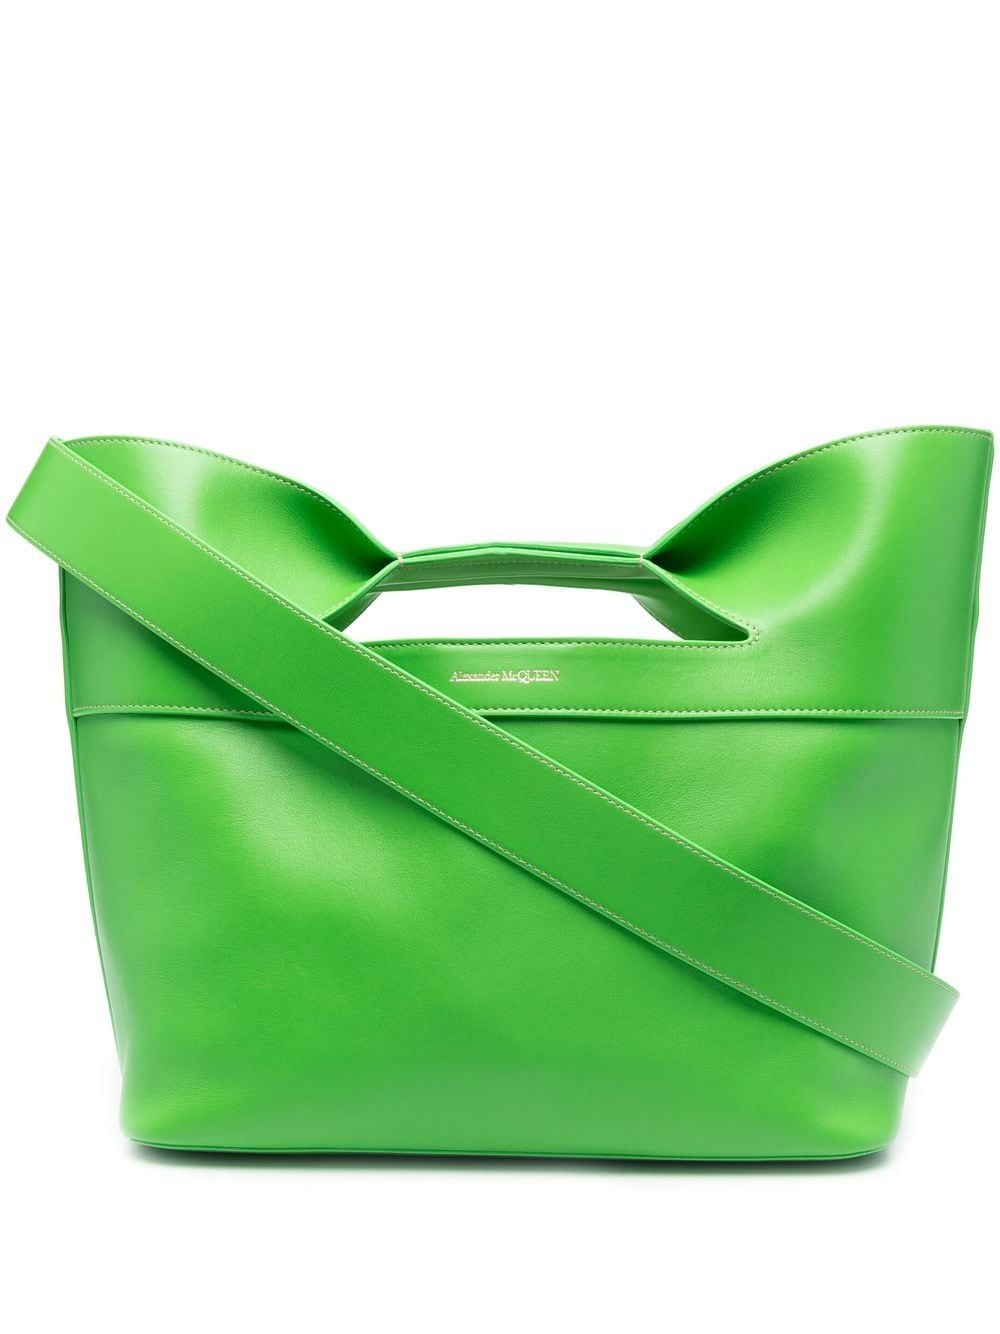 Alexander McQueen The Bow tote bag - Green von Alexander McQueen